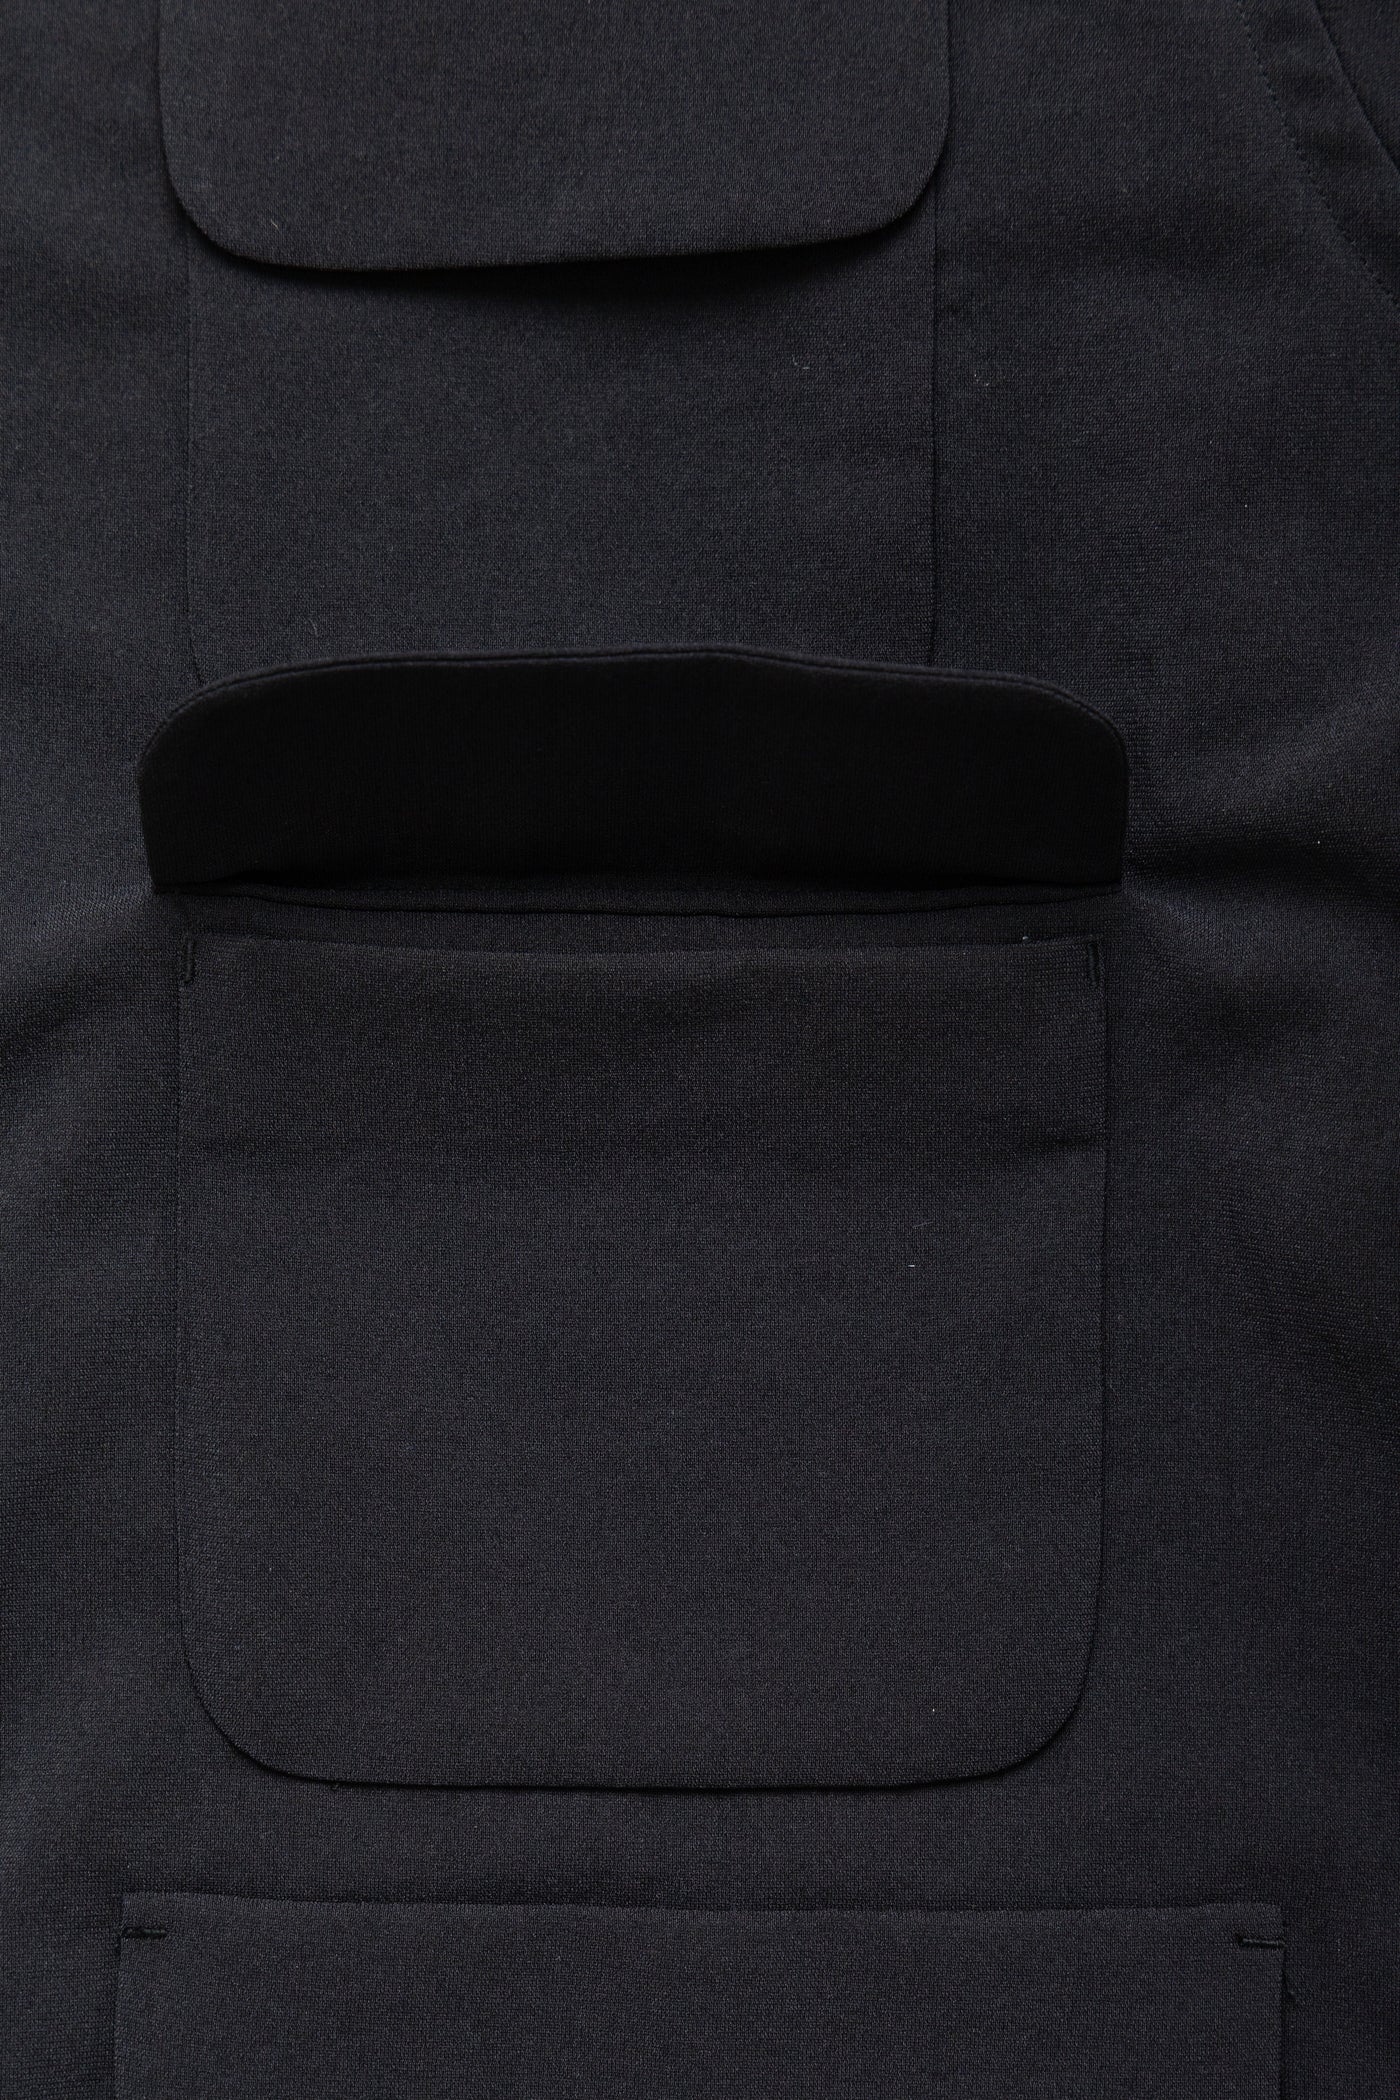 6 Pocket Classic Shirt Poly Wave Twill - Black